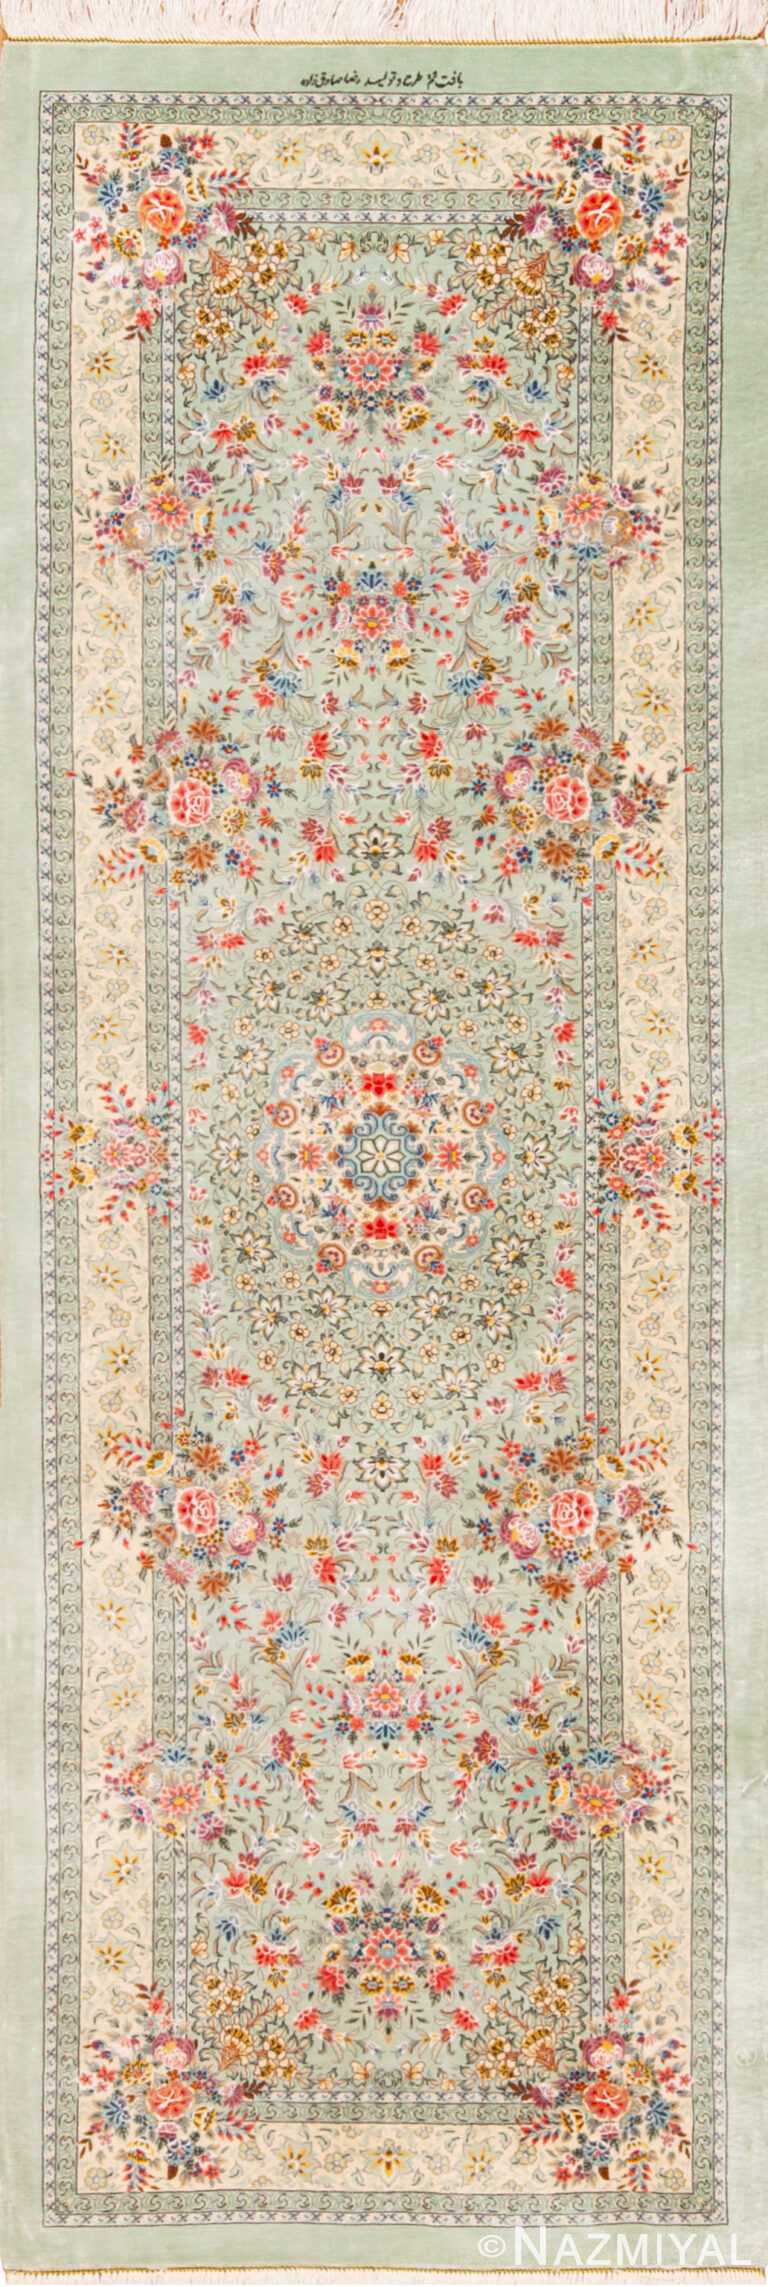 Vintage Persian Qum Silk Floral Medallion Hallway Runner Rug 72788 by Nazmiyal Antique Rugs